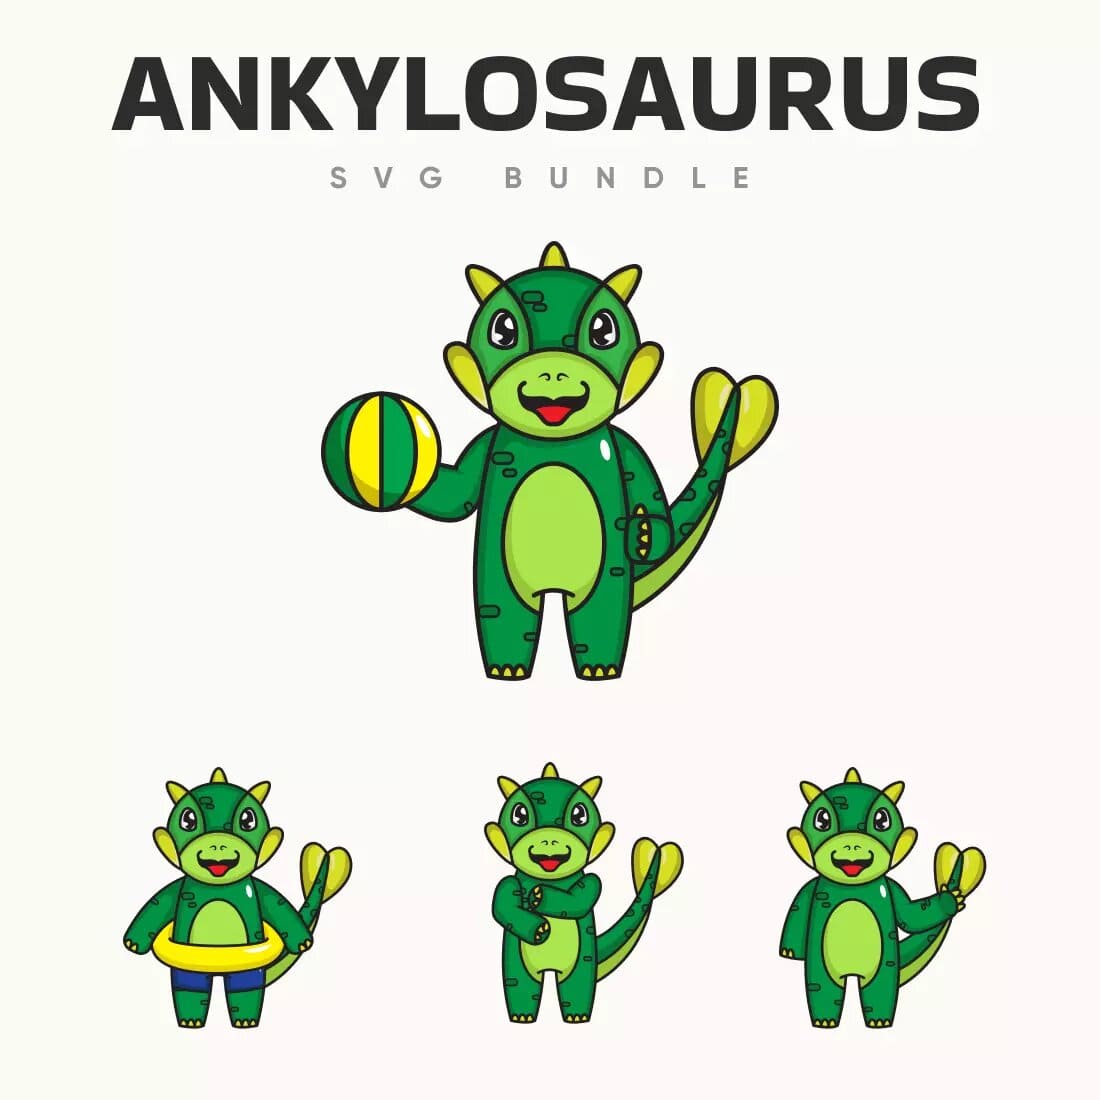 Ankylosaurus svg bundle is shown here.